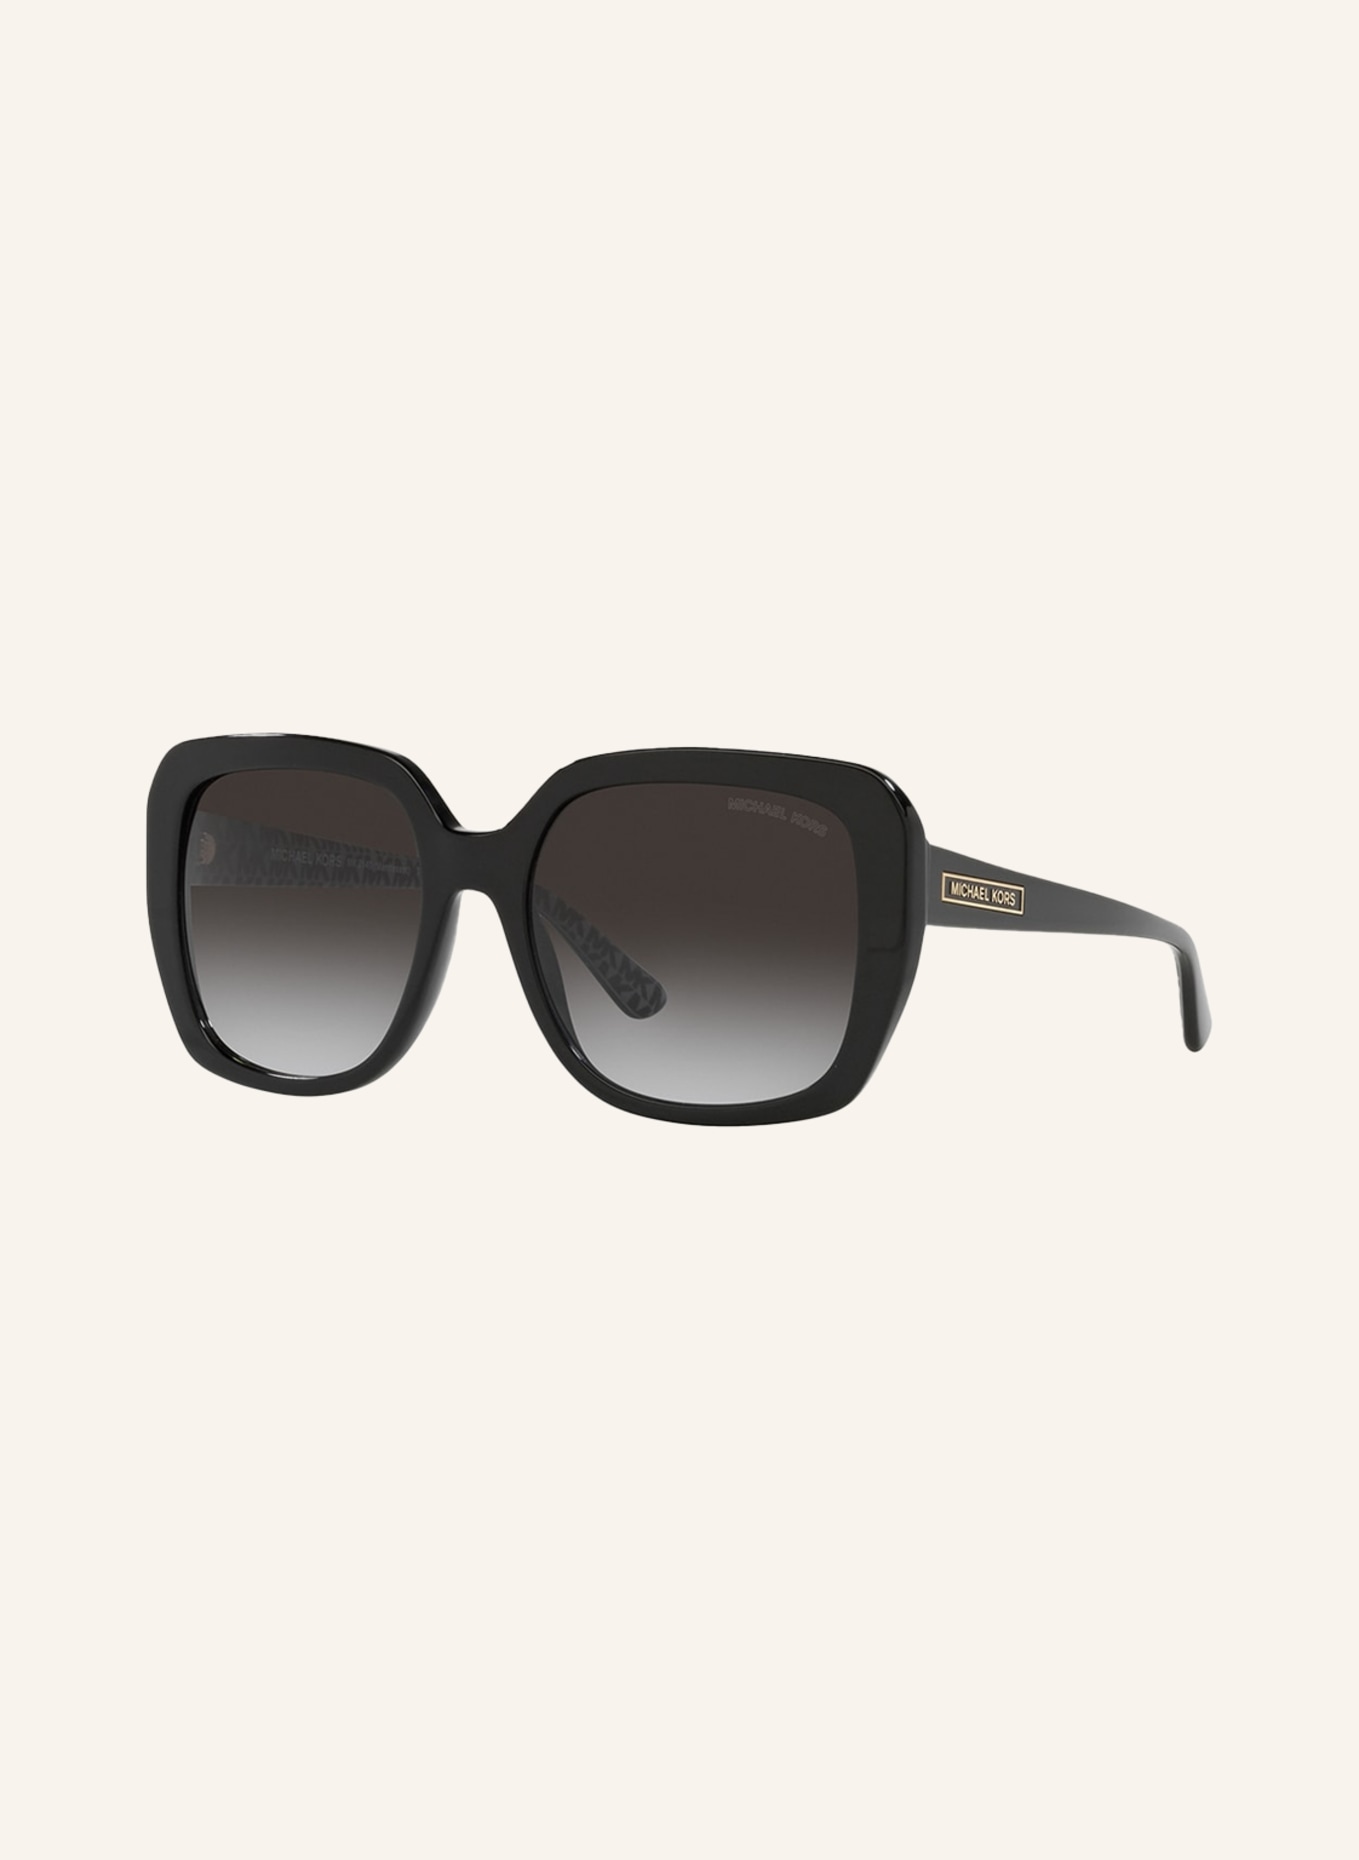 MICHAEL KORS Sunglasses MK-2140 MANHASSET, Color: 30058G - BLACK/GRAY GRADIENT (Image 1)